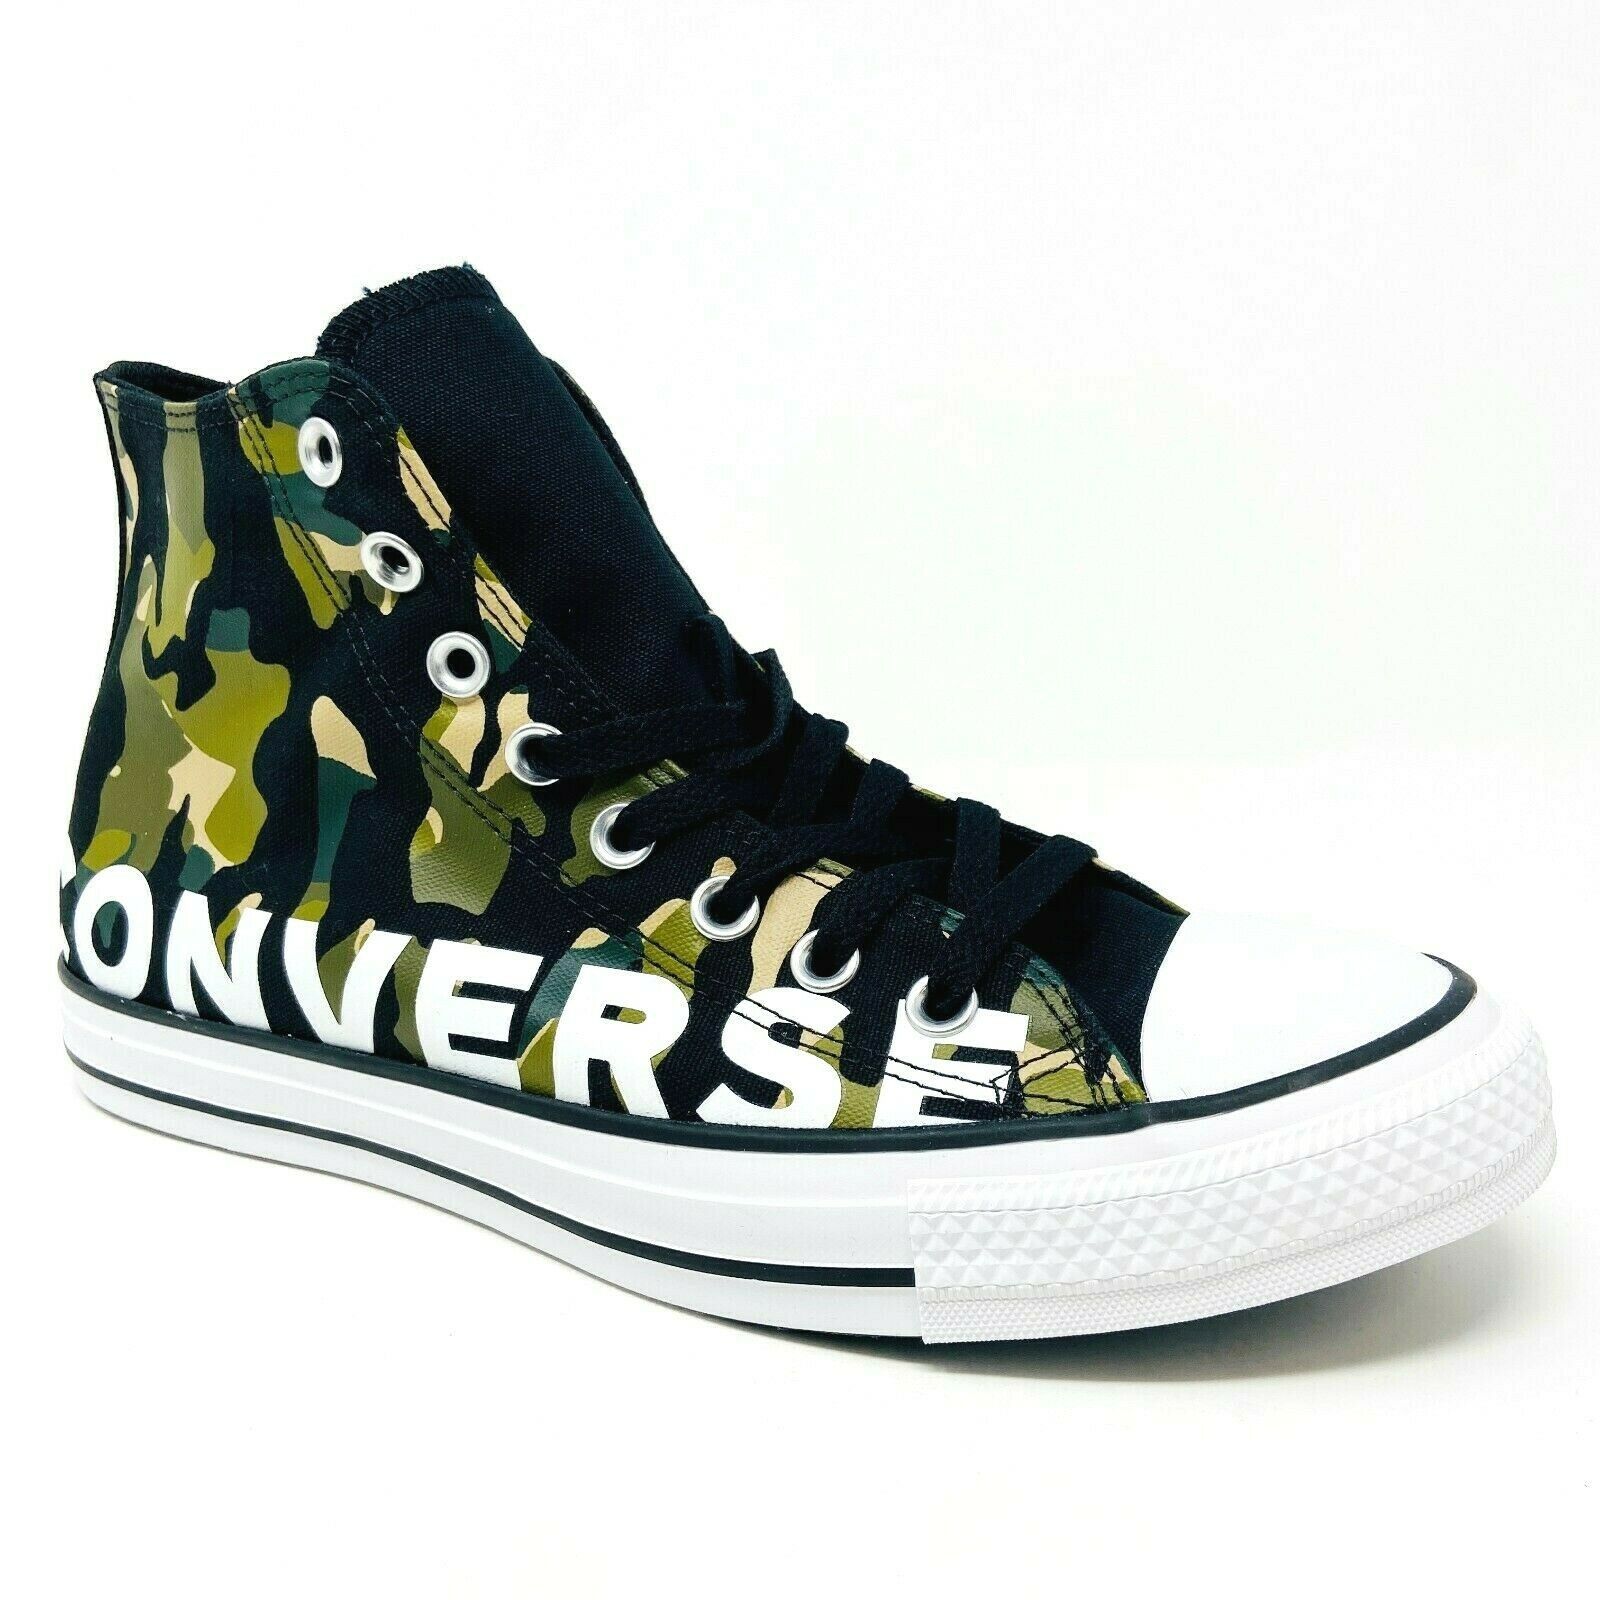 Converse Chuck Taylor All Star Hi Black Green Camo 166232F Womens Shoes